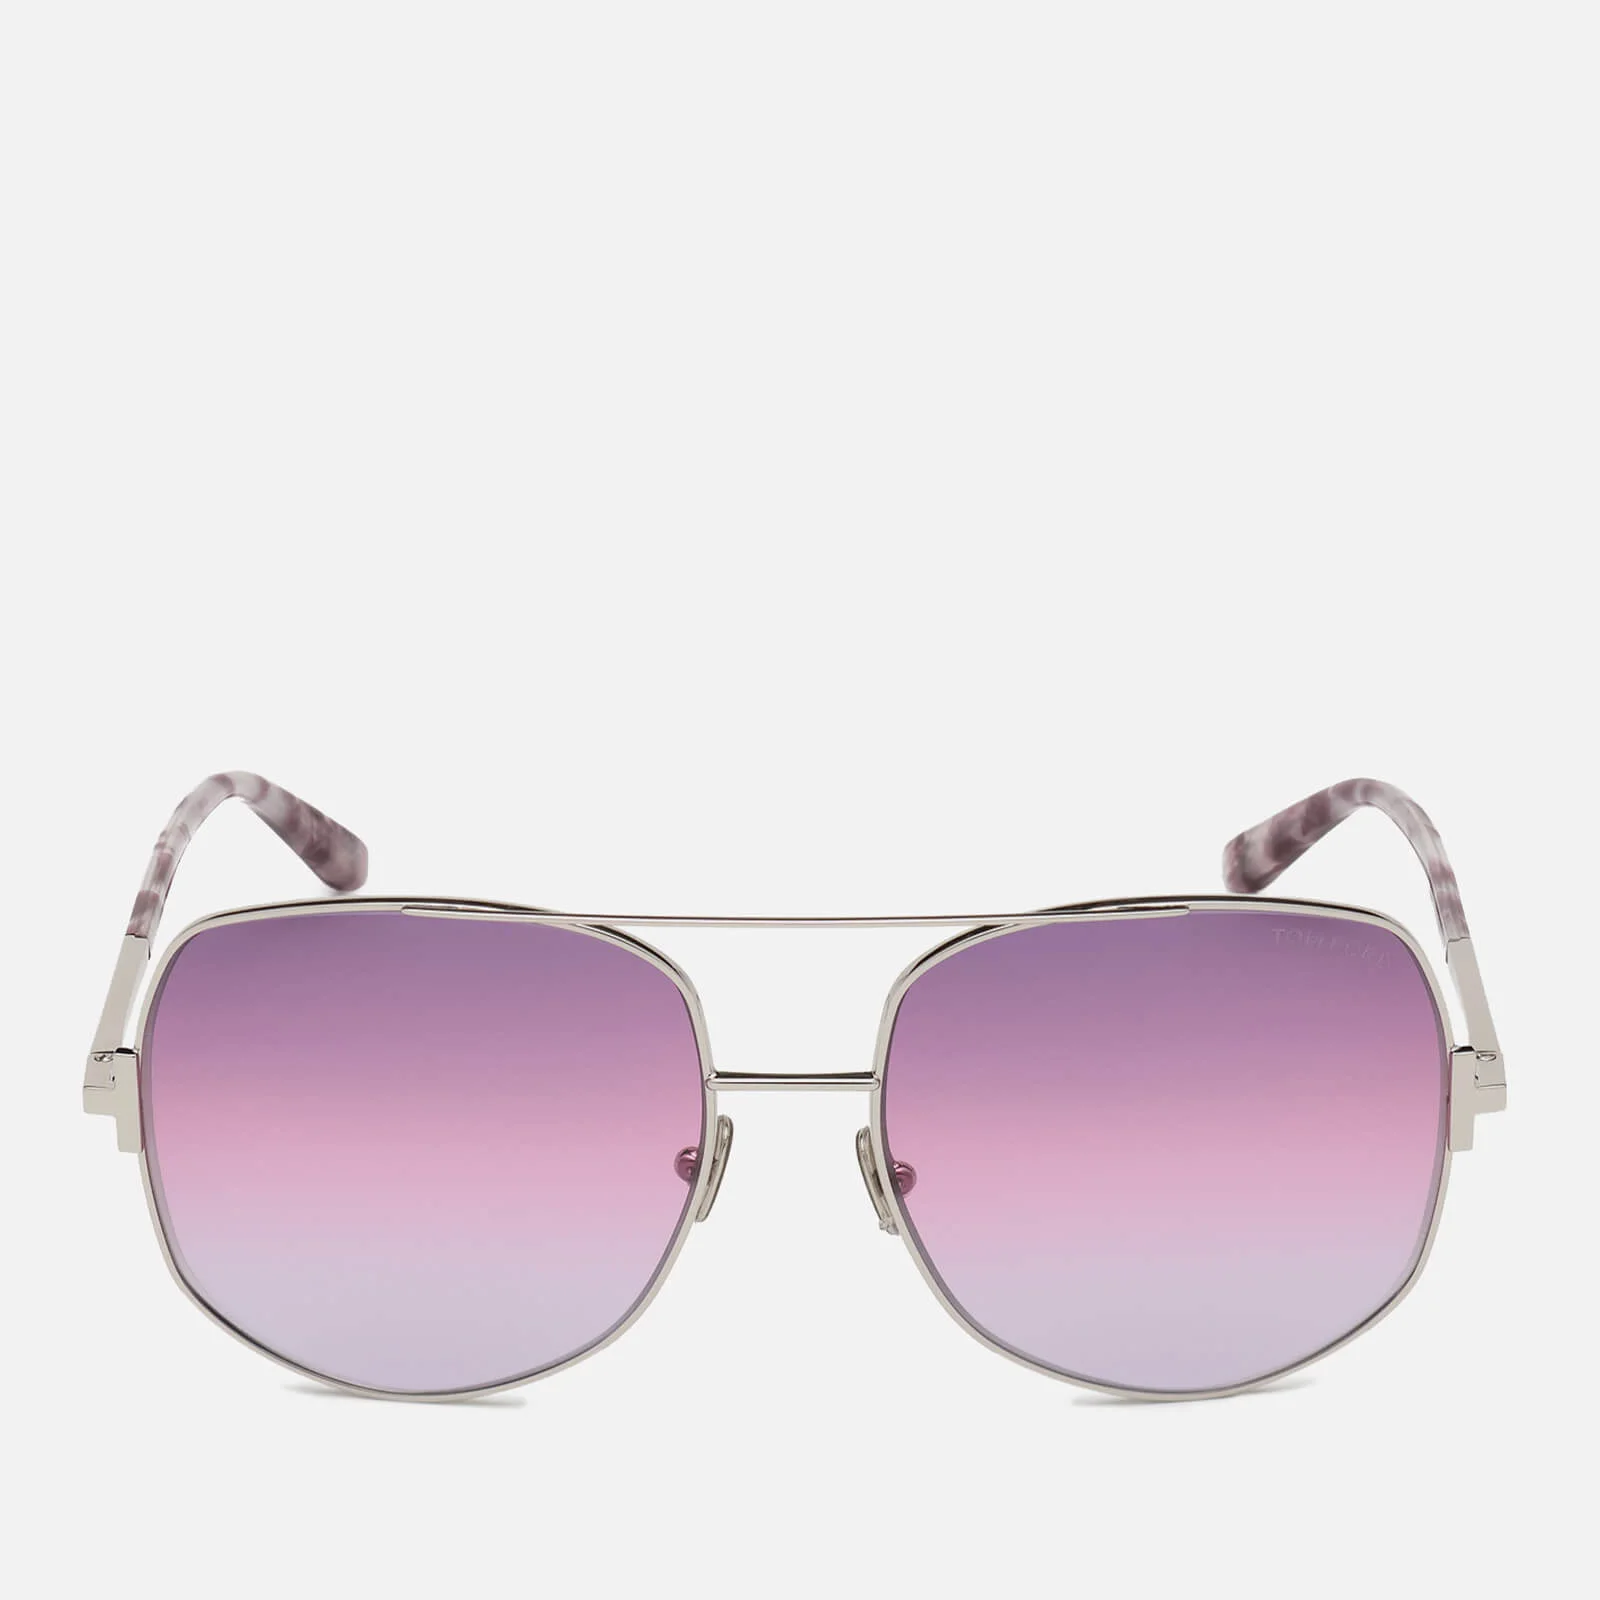 Tom Ford Women's Lennox Pilot Style Sunglasses - Palladium/Violet Image 1